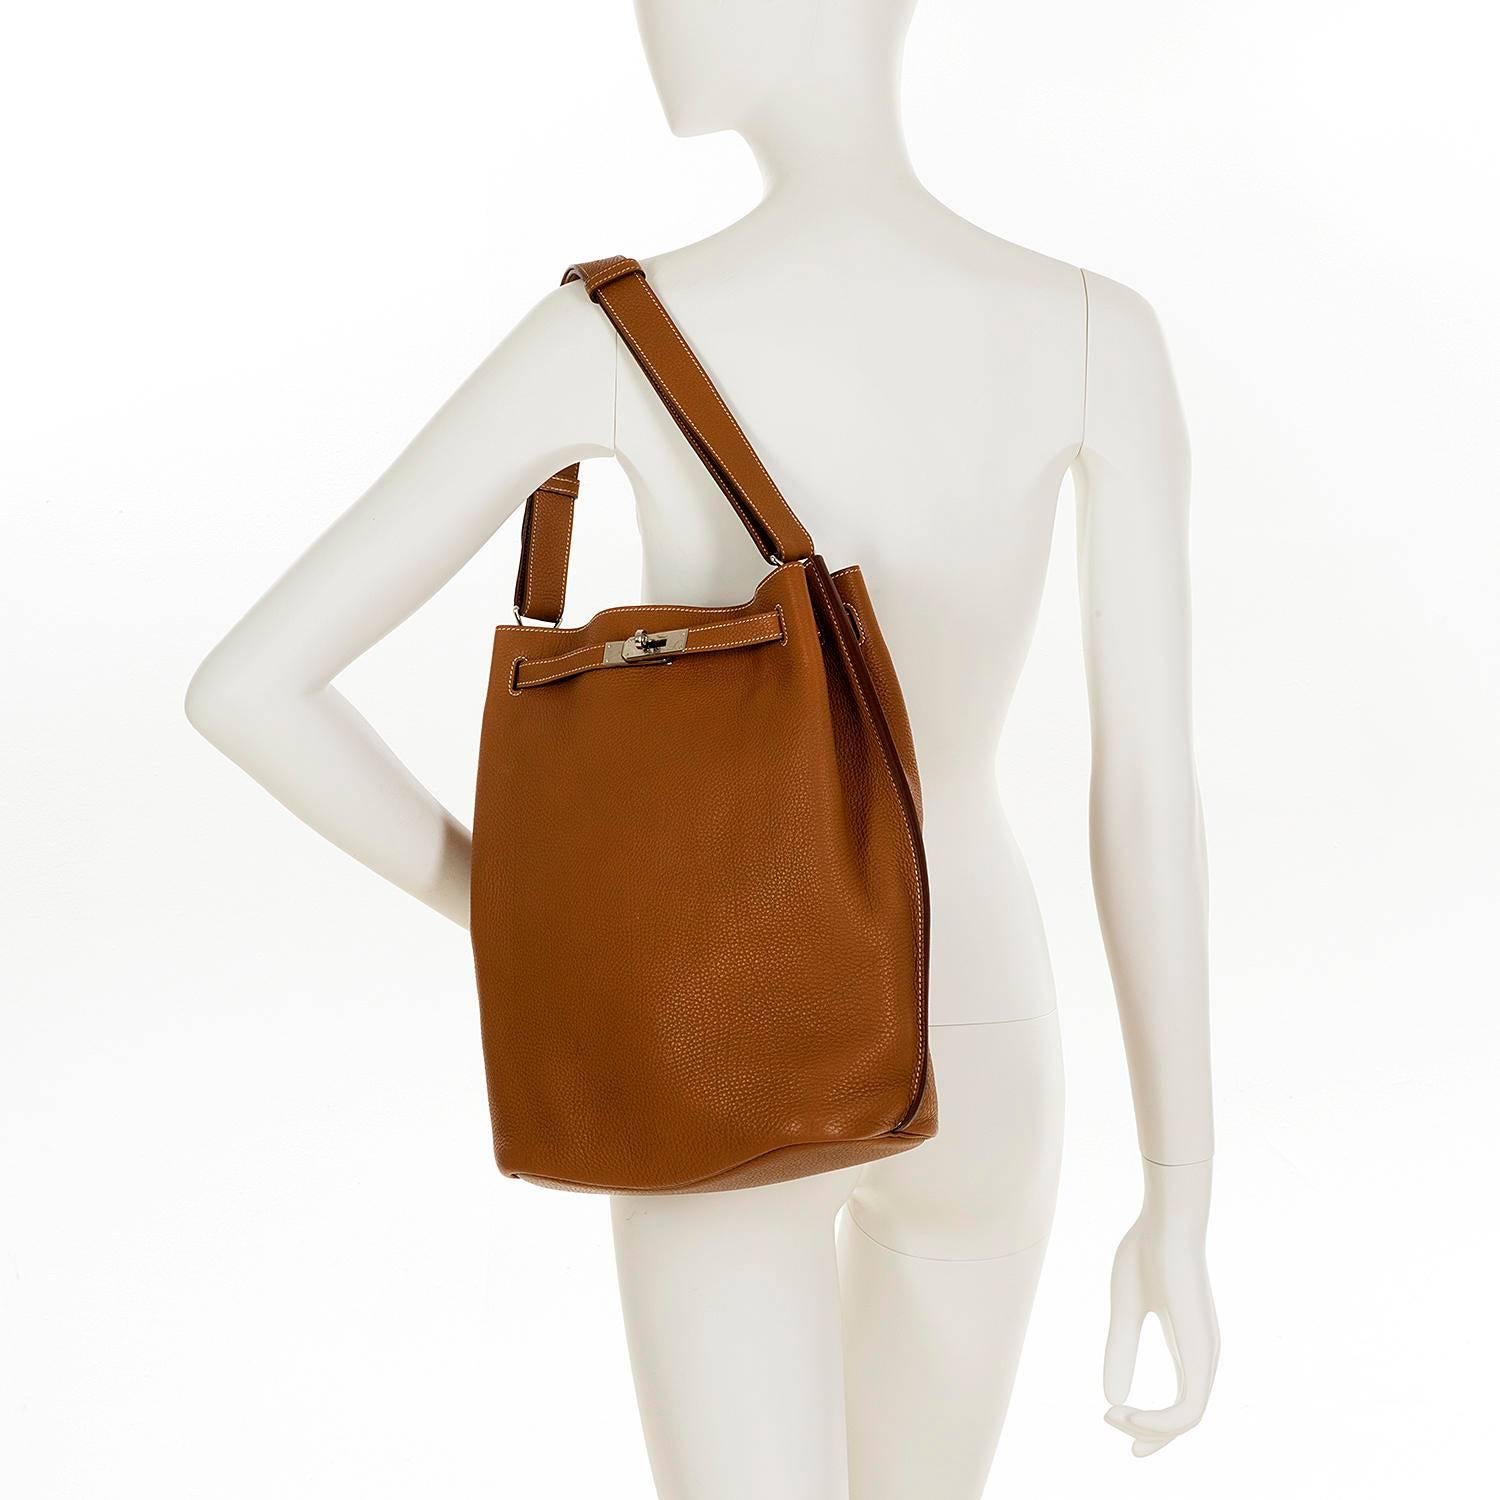 WOW Pristine Hermes 26cm 'So Kelly' Sable Togo Leather Bag / Palladium Hardware For Sale 1